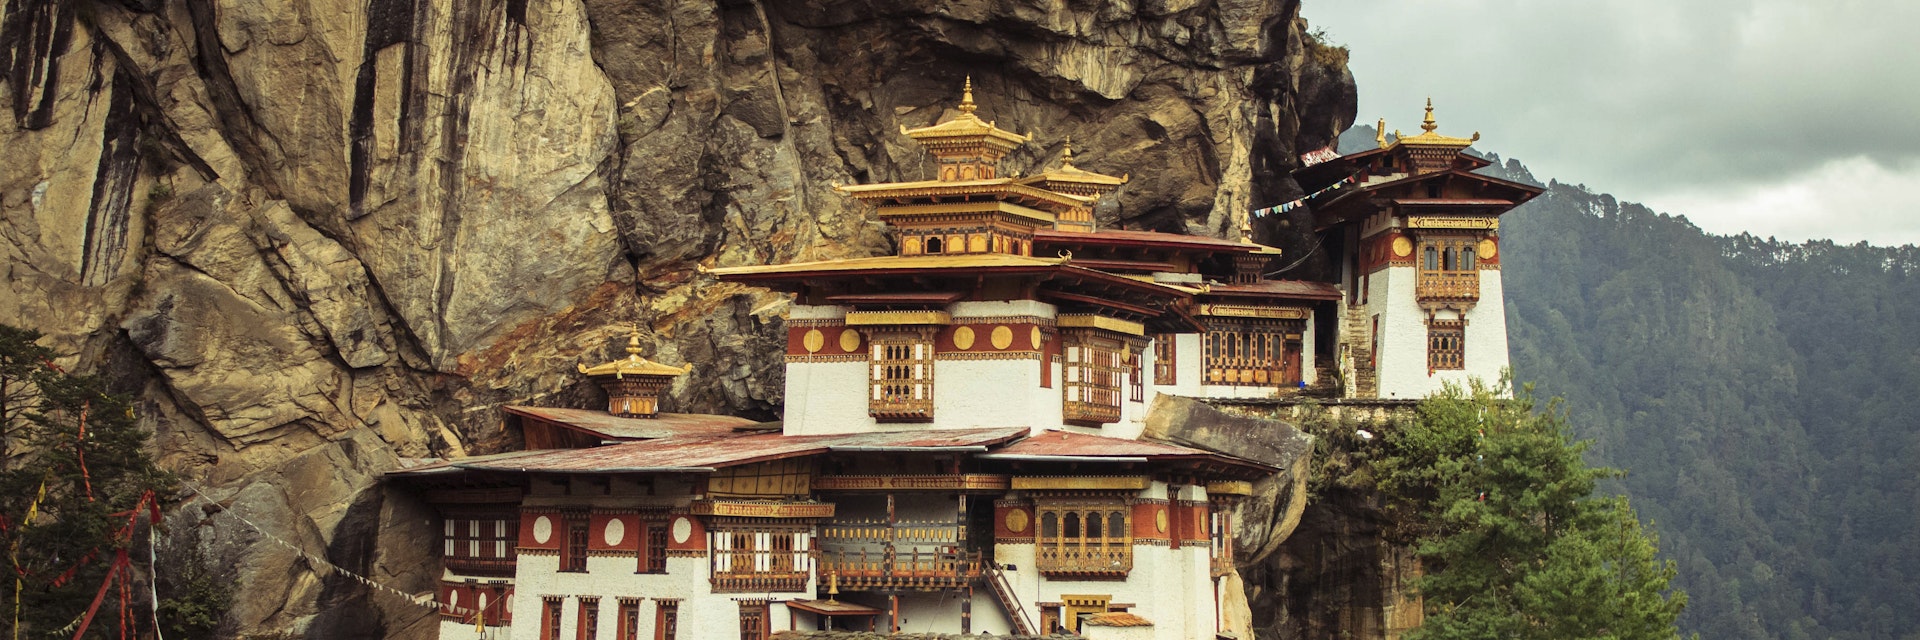 Taktshang Goemba(Tigers Nest Monastery), Bhutan, in a mountain cliff